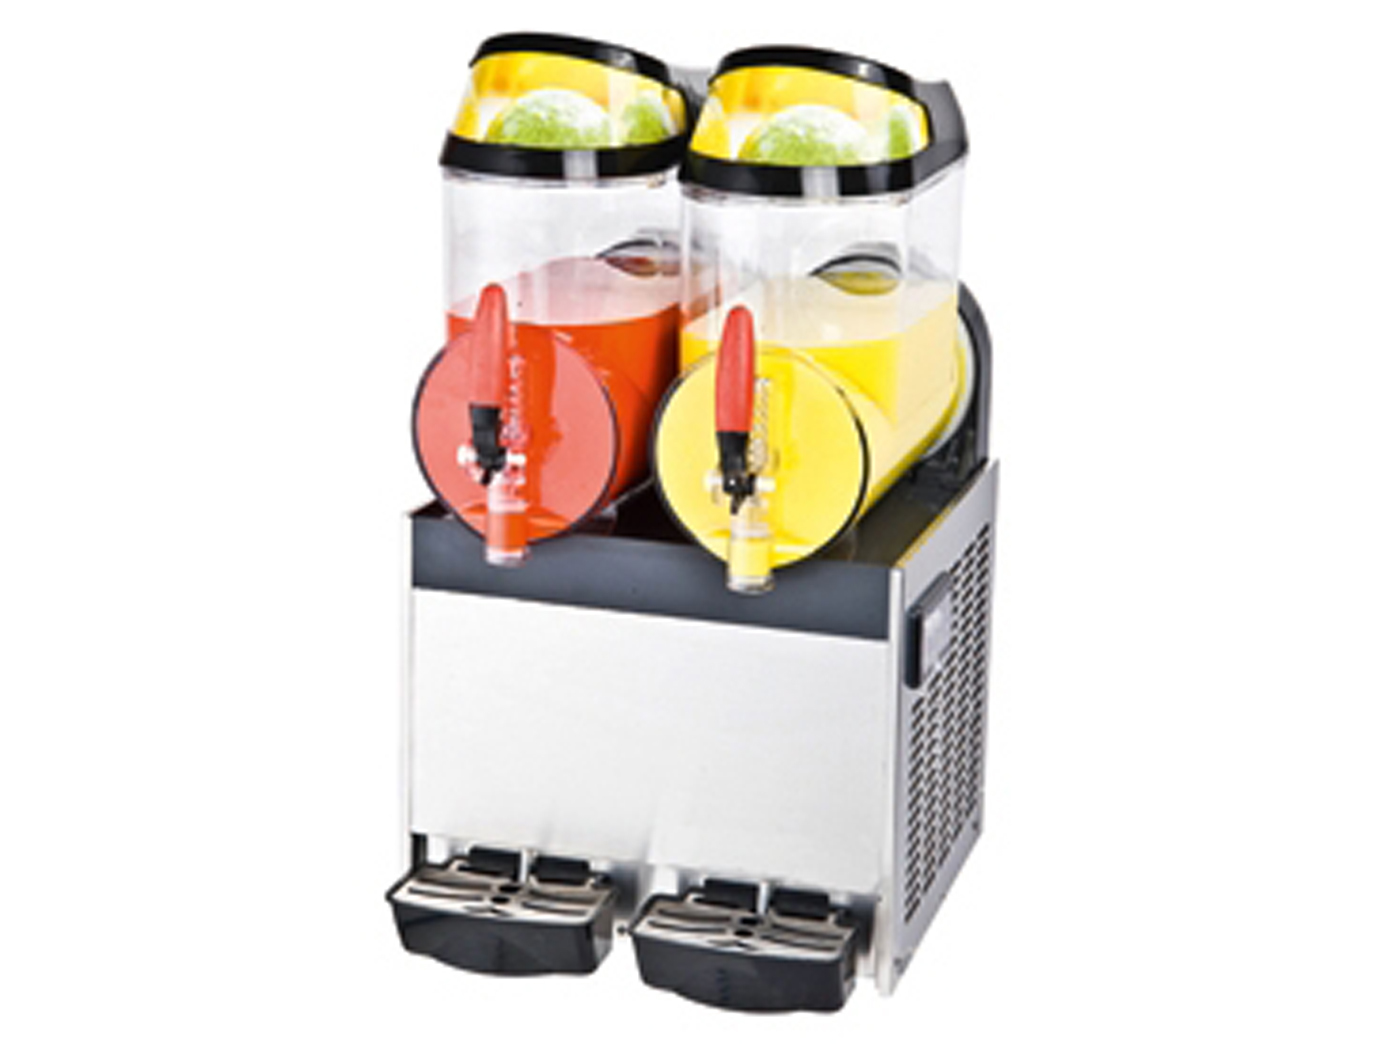 Gastro Slush Eis Maschine 2x 10L 400W 2 176 C 3 176 C Profi Slushy Maker GGG eBay